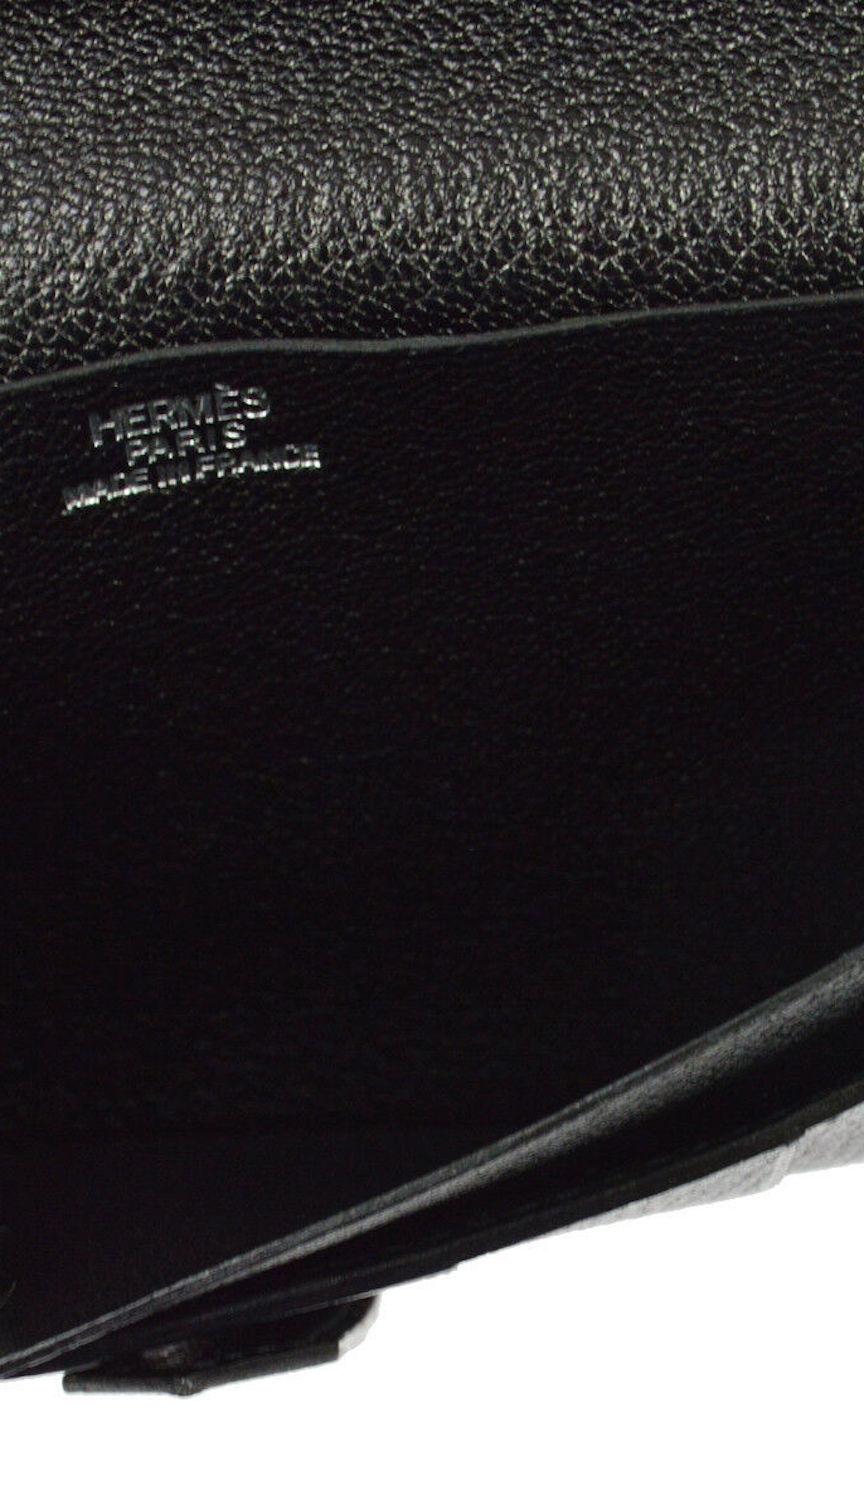 Hermes Black Leather Palladium 'H' Clutch Wallet in Box 2